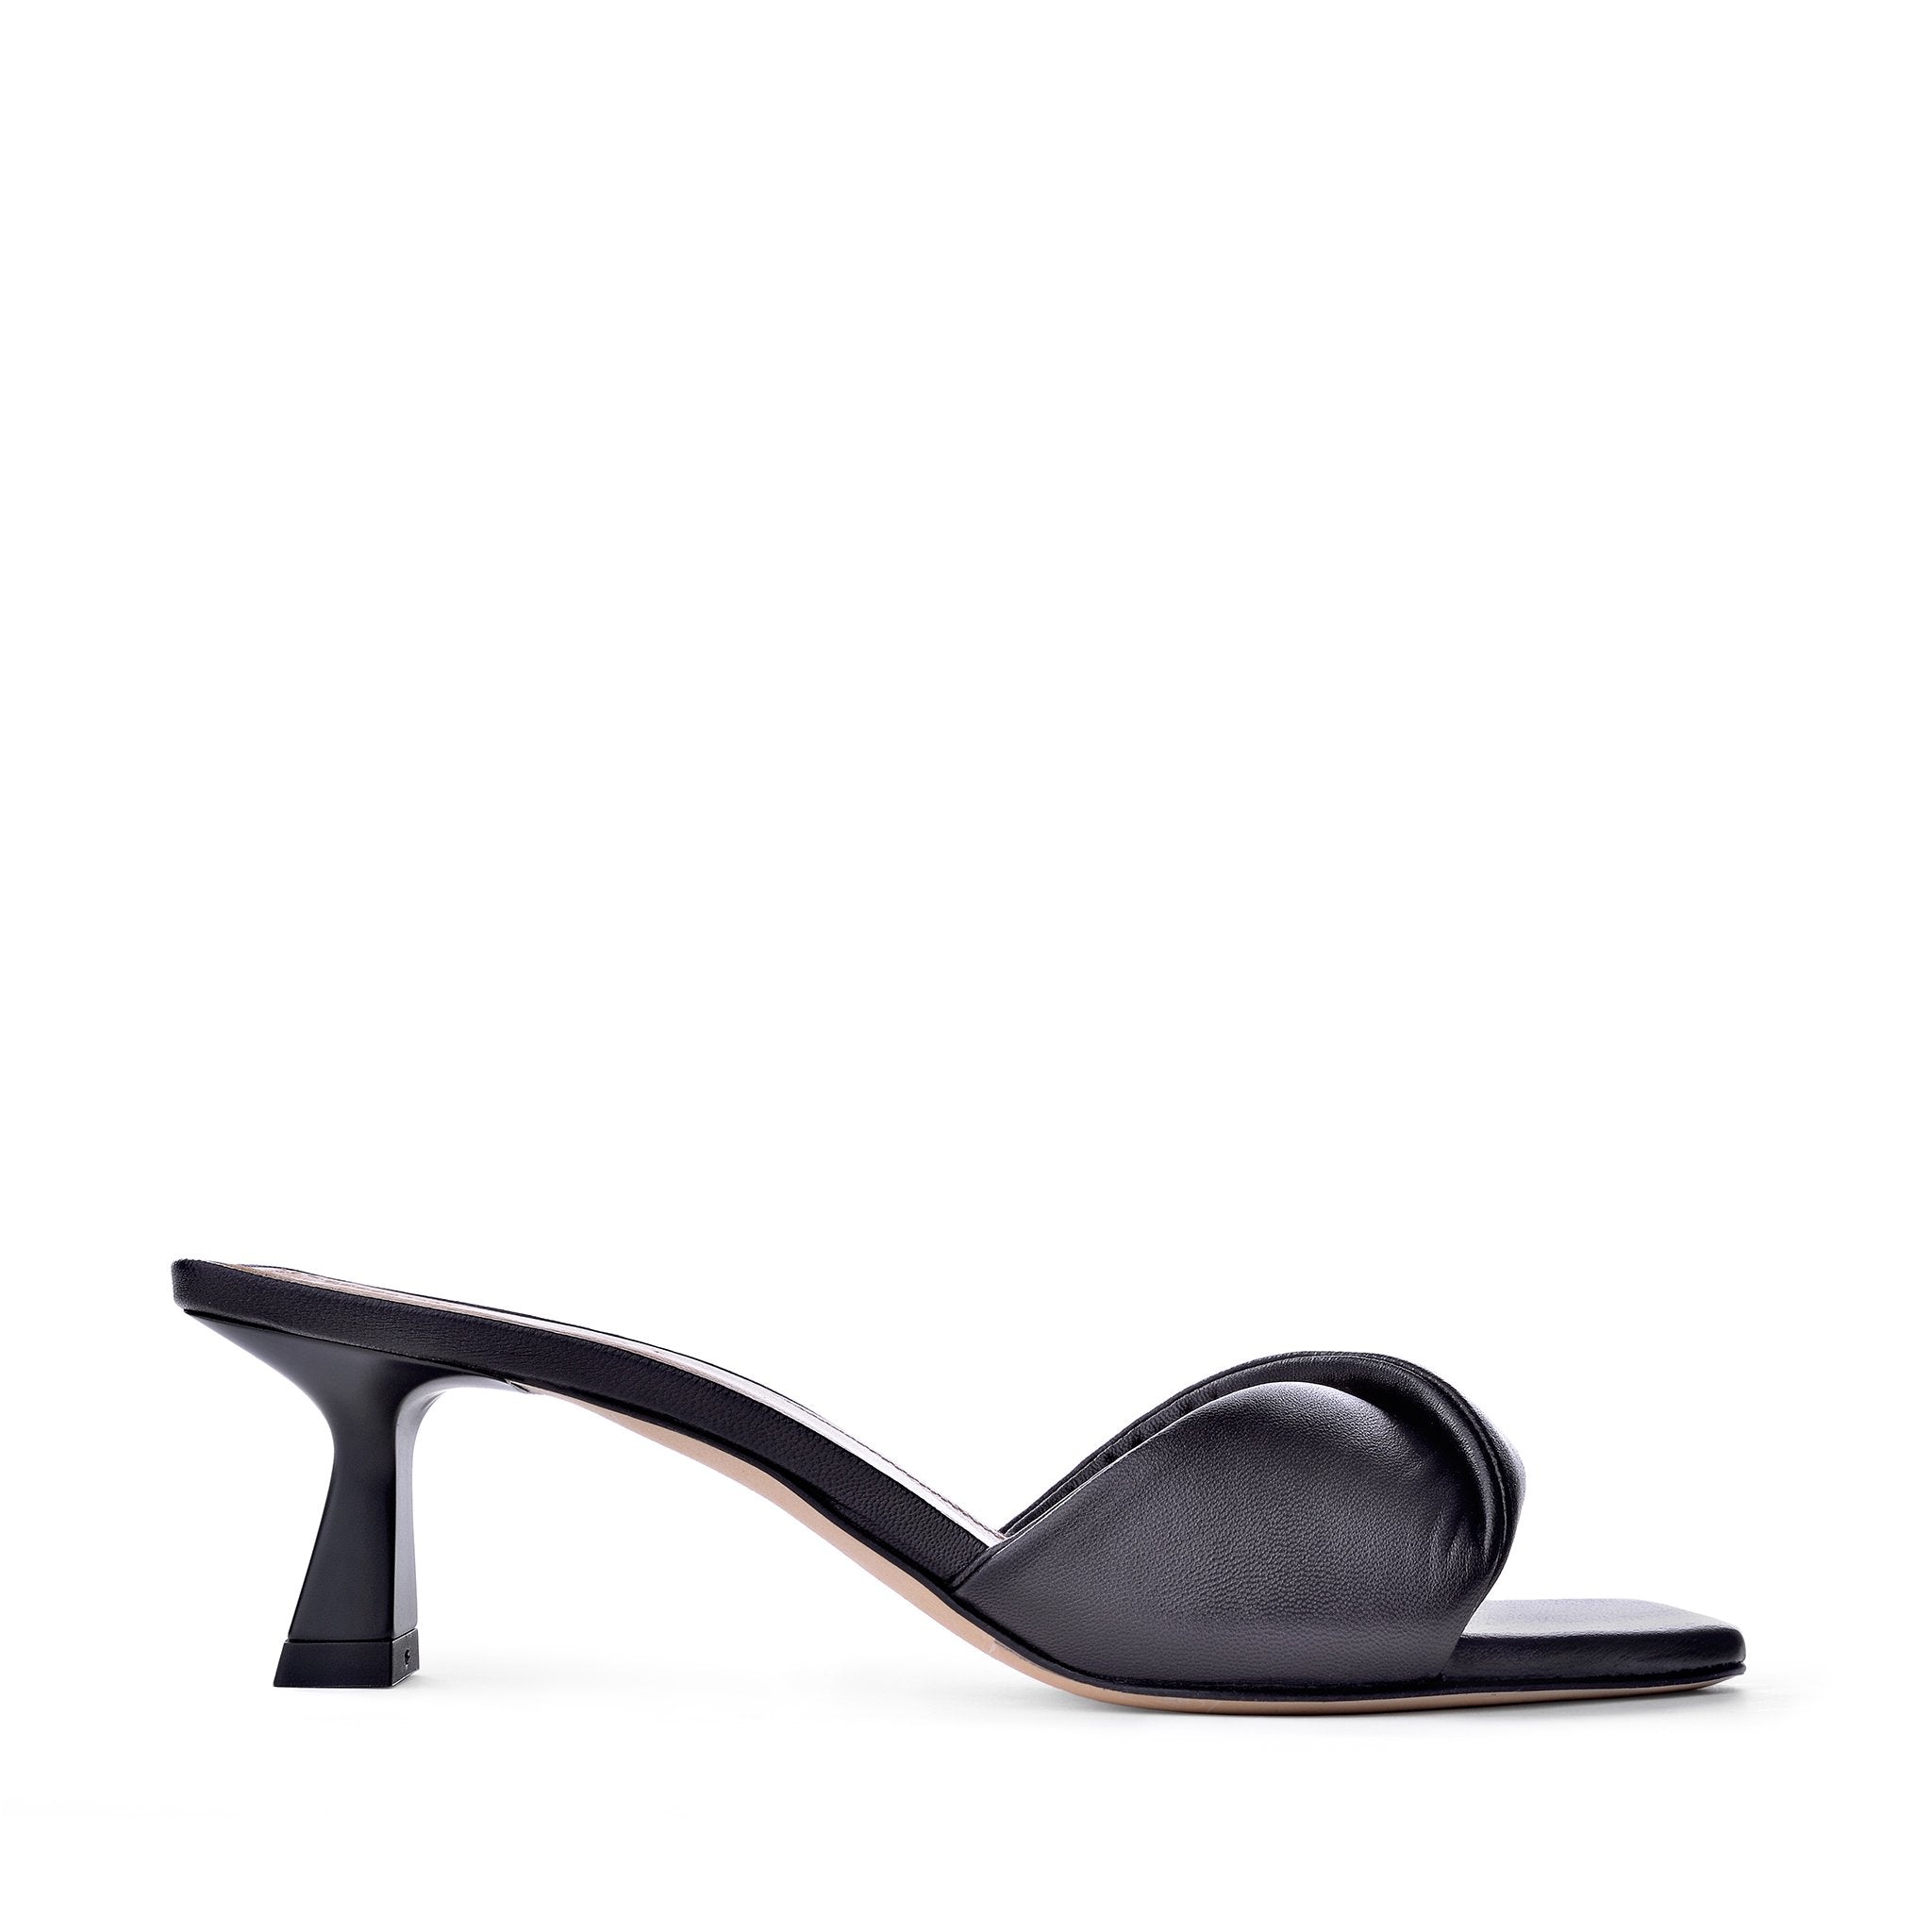 Haya Black Soft Leather Sandals 1413-02 - 1